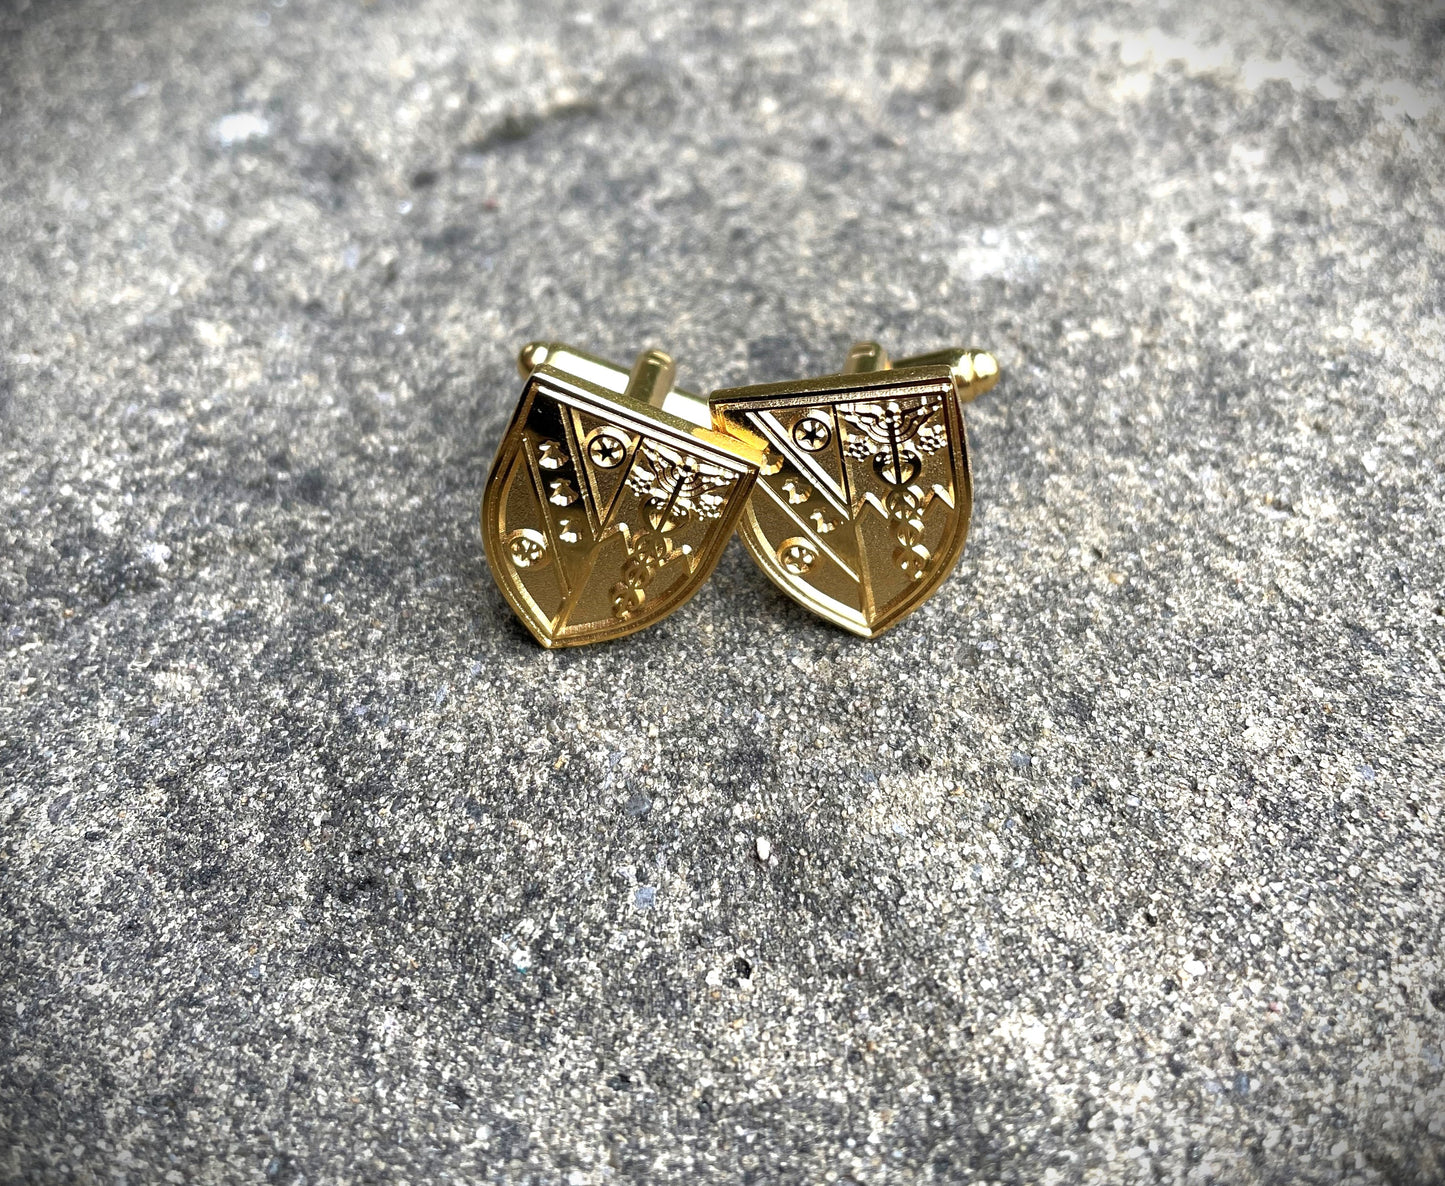 Darwin Crest Gold-Plated Cufflinks